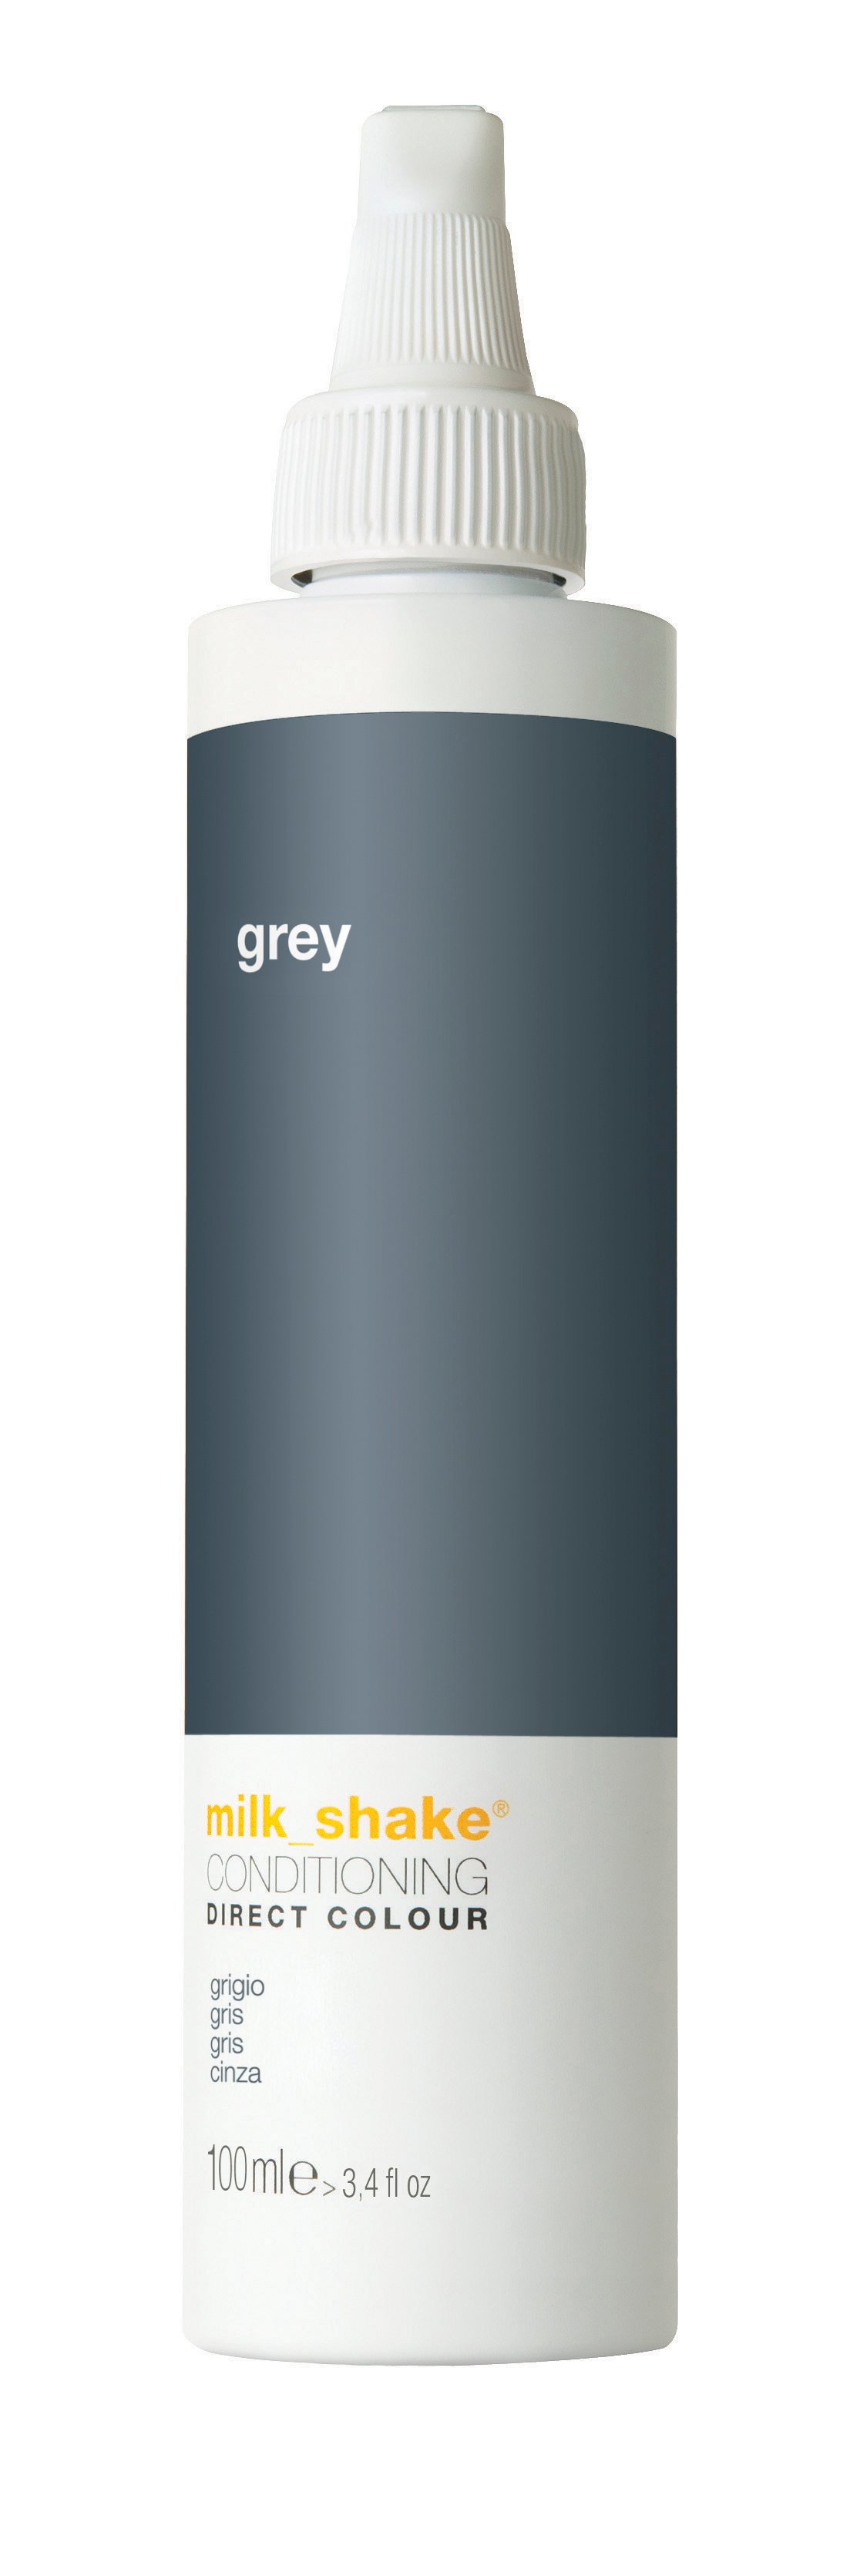 milk_shake - Direct Color 100 ml - Grey